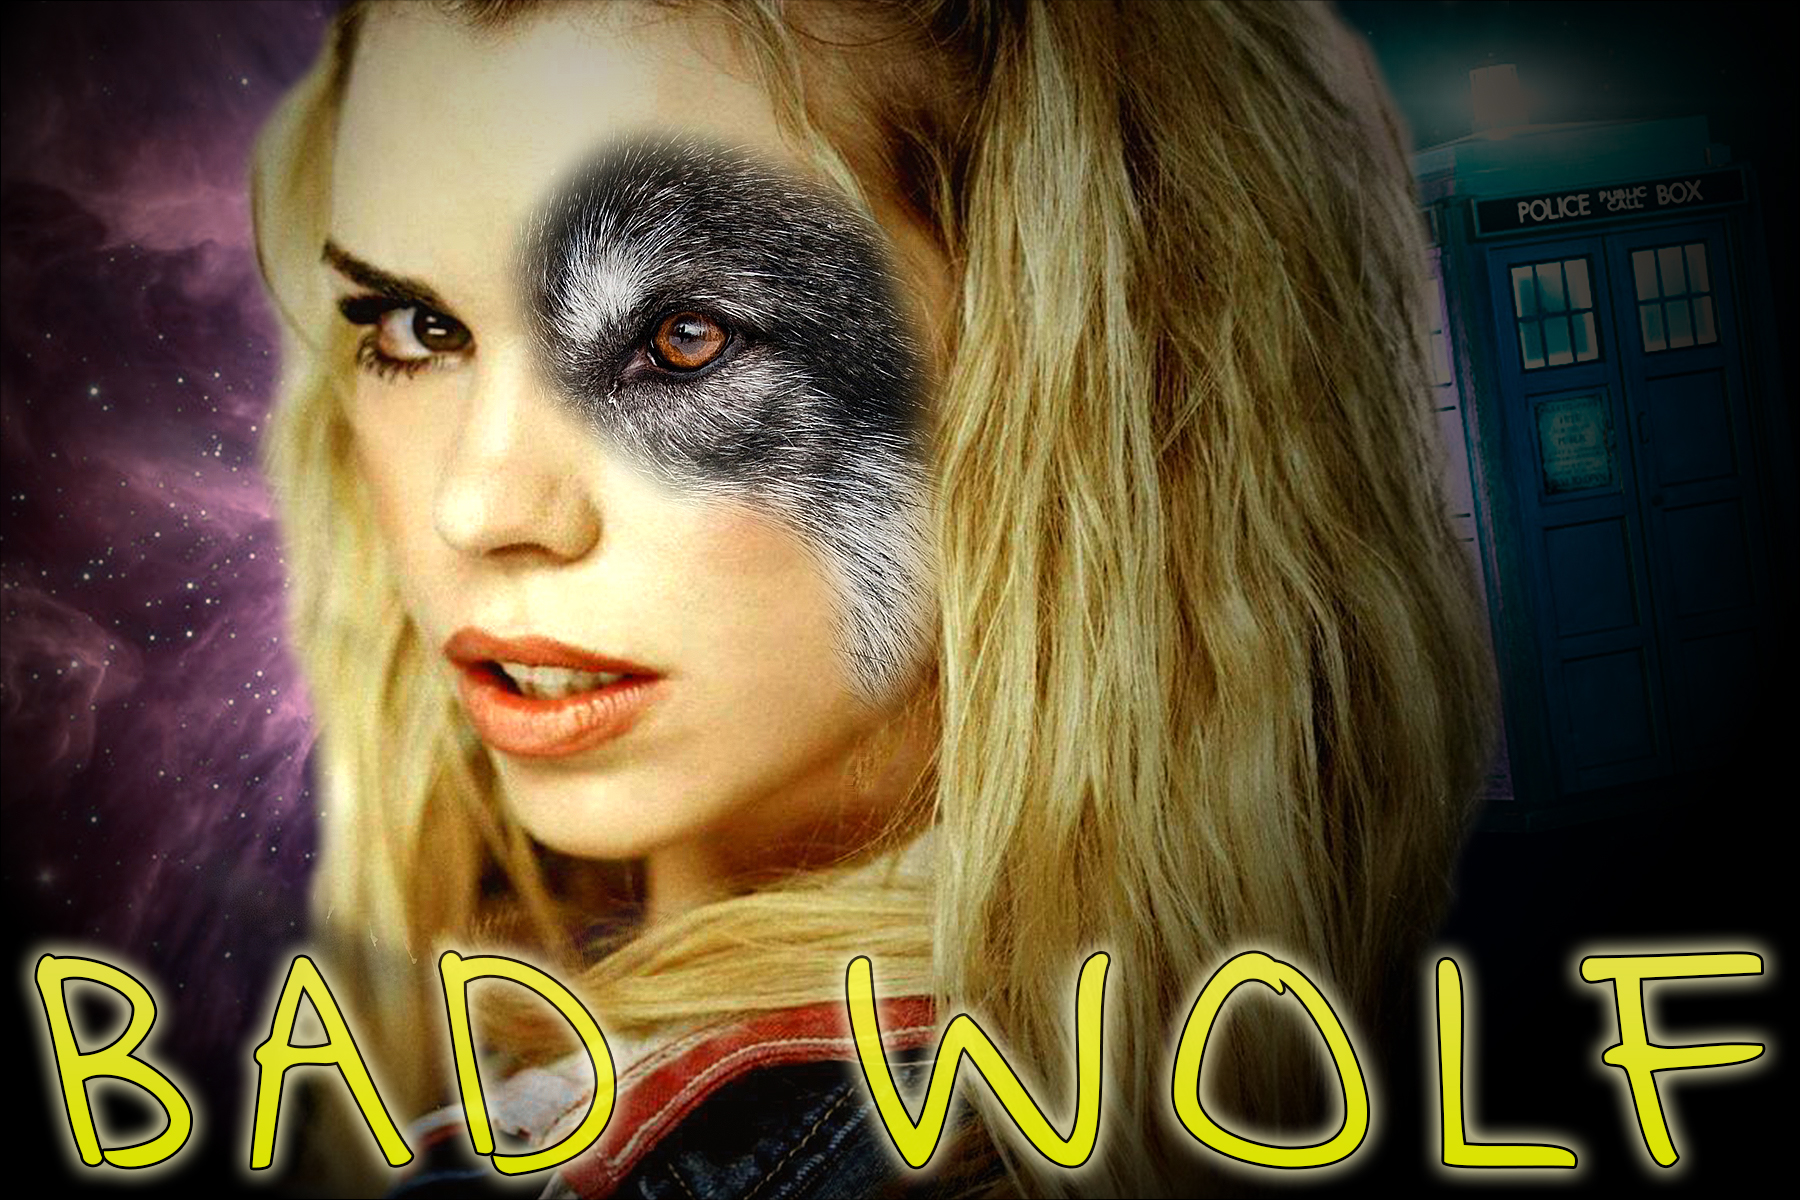 Bad-Wolf-doctor-who-34775258-1800-1200.jpg